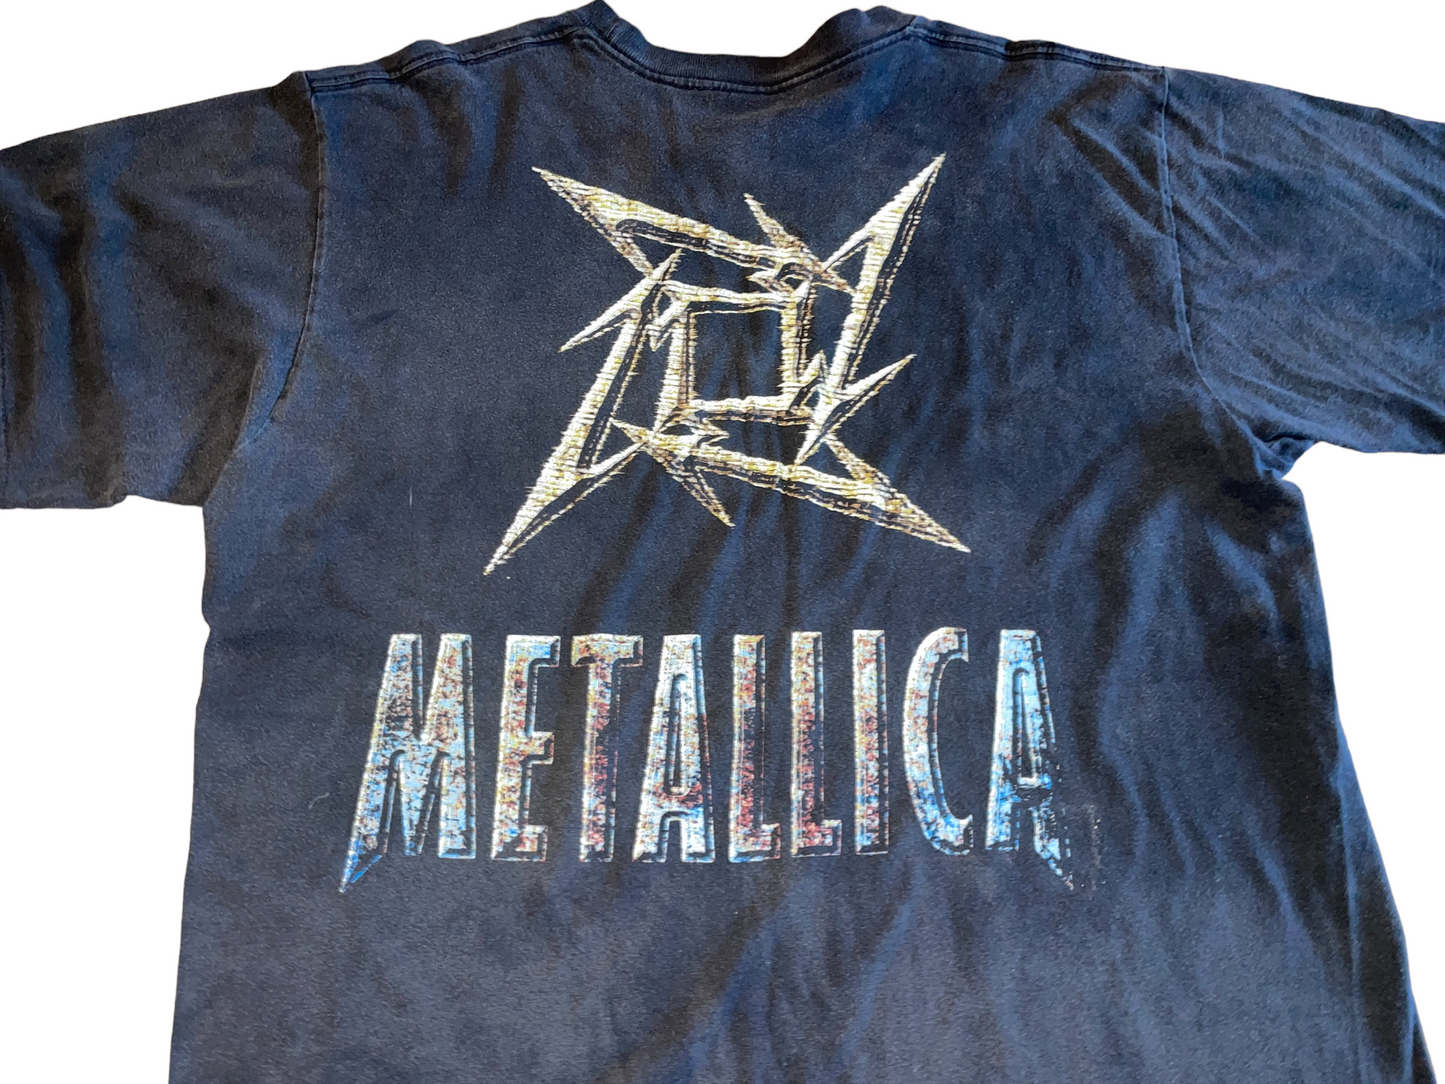 Vintage 1990's Metallica T-Shirt